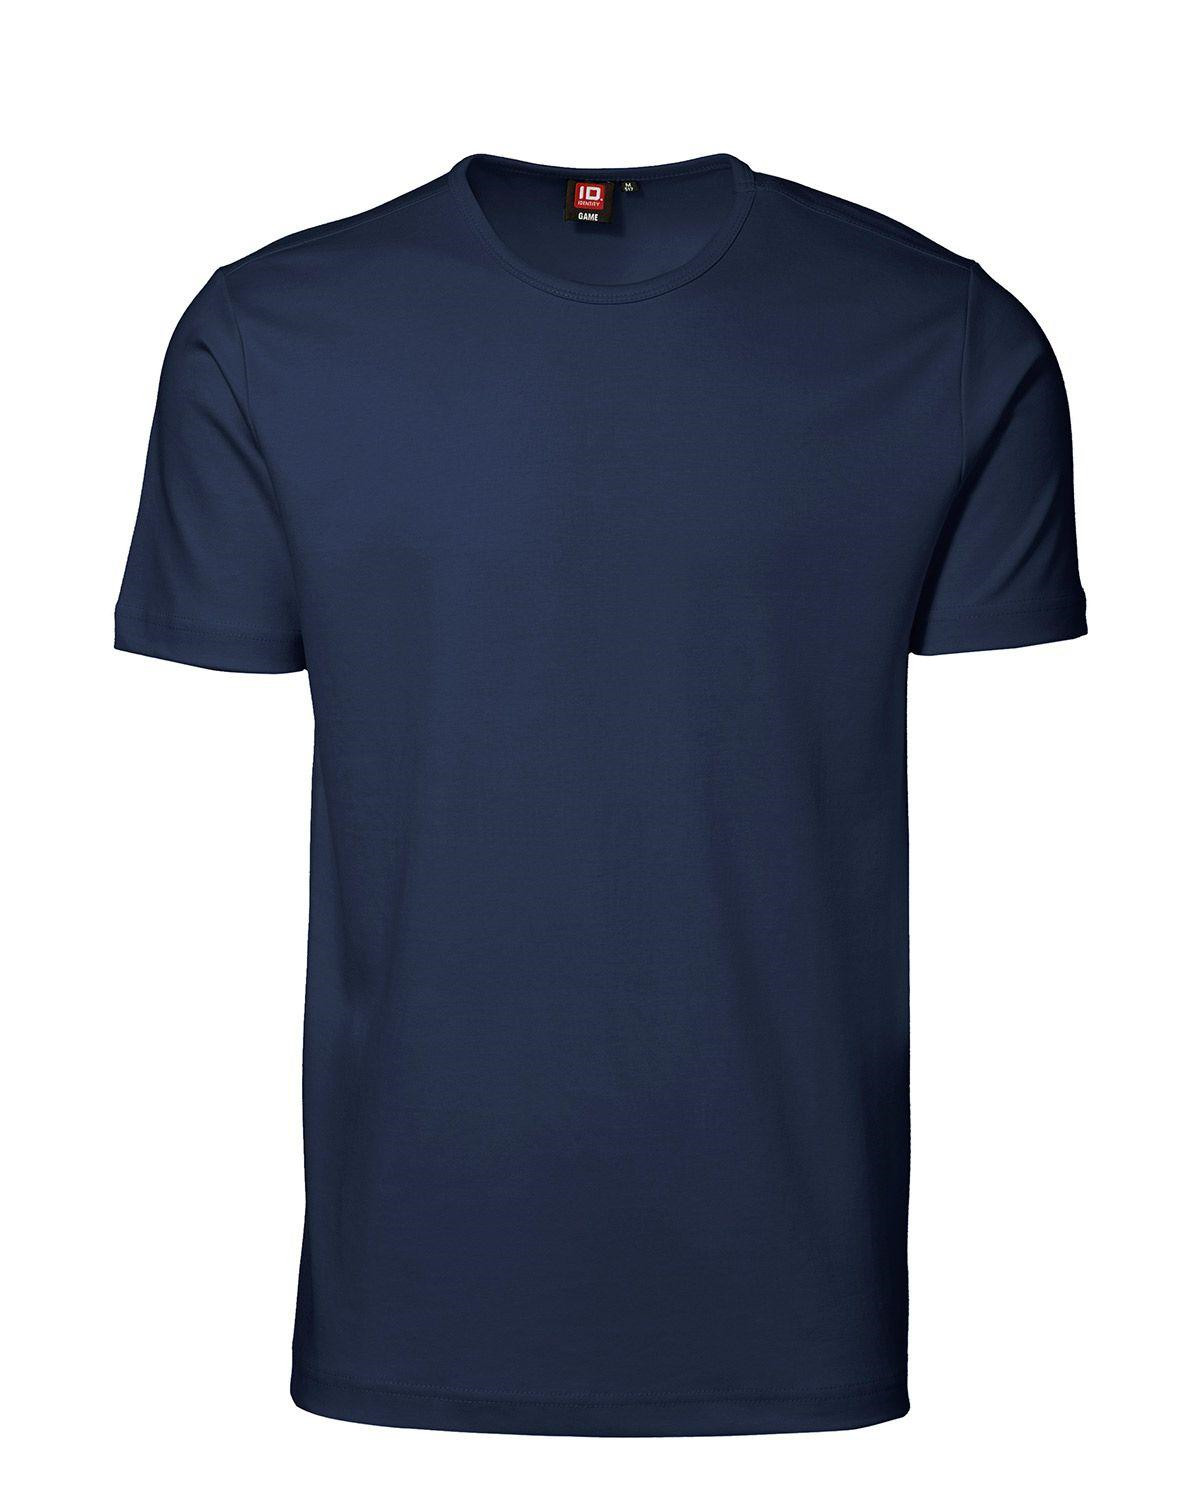 ID Interlock T-shirt (Navy, 3XL)